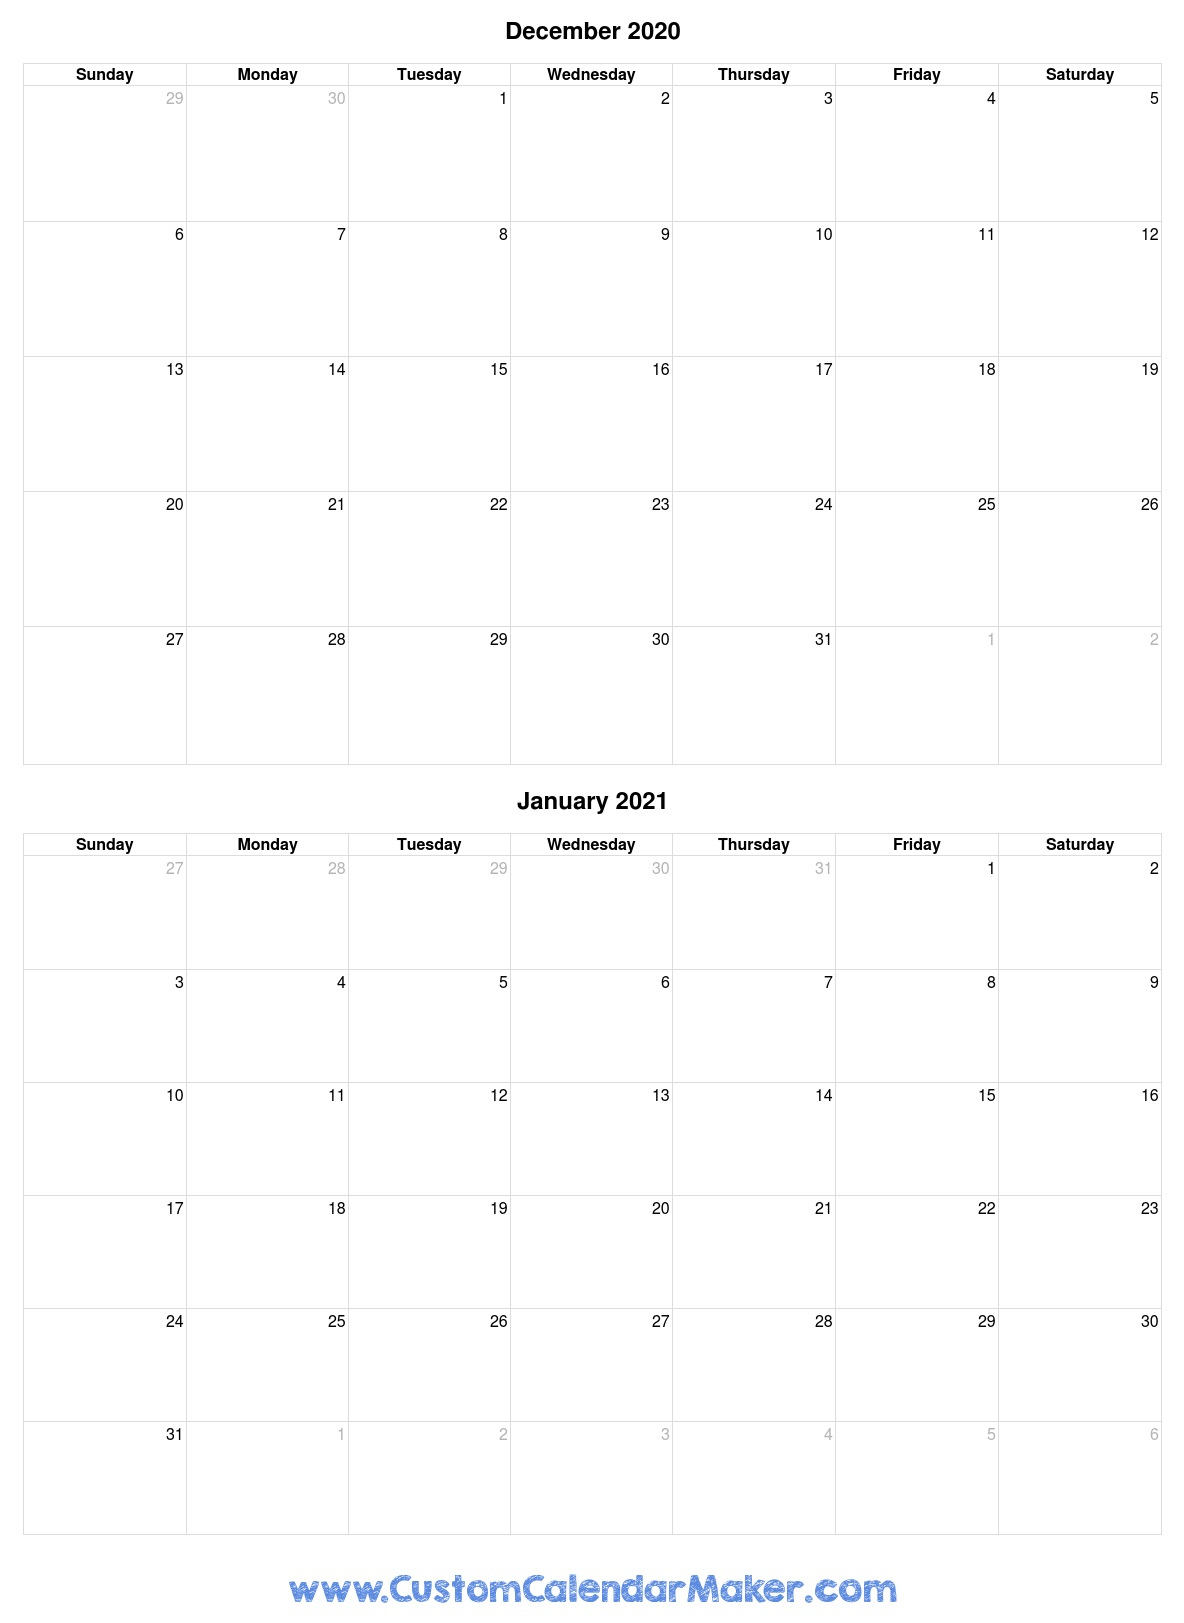 Calendar December 2020 January 2021 | Printable Calendars 2021 Calendar For December 2020 And January 2021